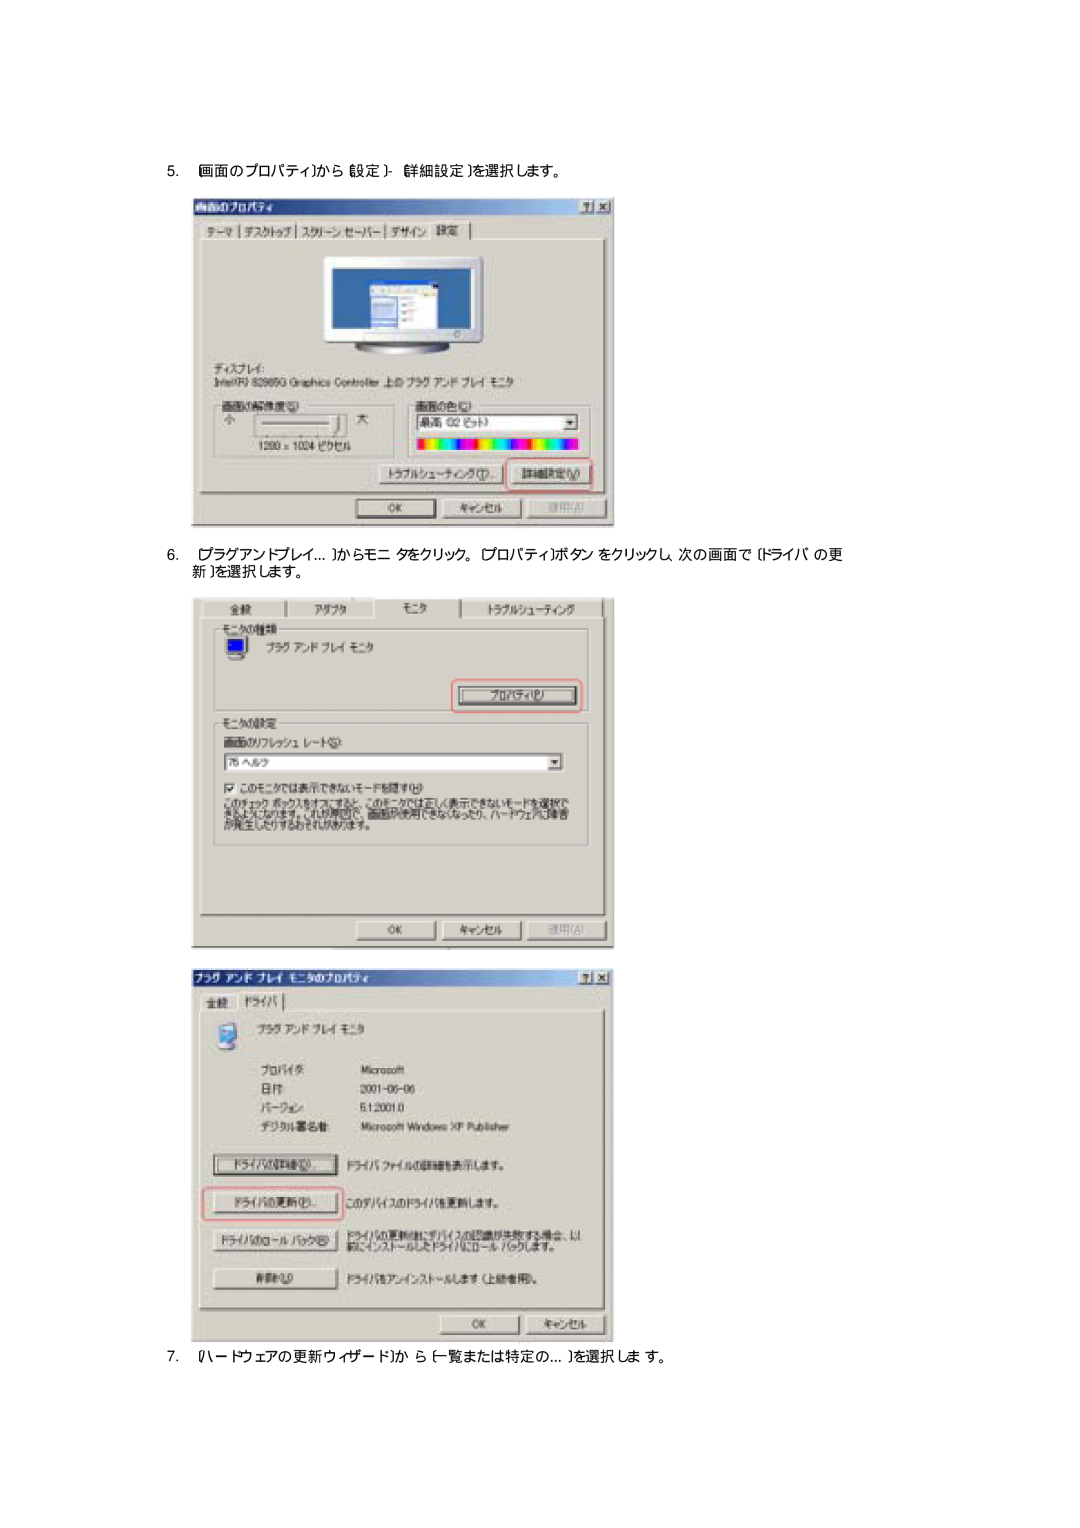 Samsung LS19CIBQS1/XSJ, LS19CIBQSV/XSJ manual 5. 〔画面のプロパティ〕から〔設定〕- 〔詳細設定〕を選択します。, 7. 〔ハードウェアの更新ウィザード〕か ら〔一覧または特定の…〕を選択しま す。 